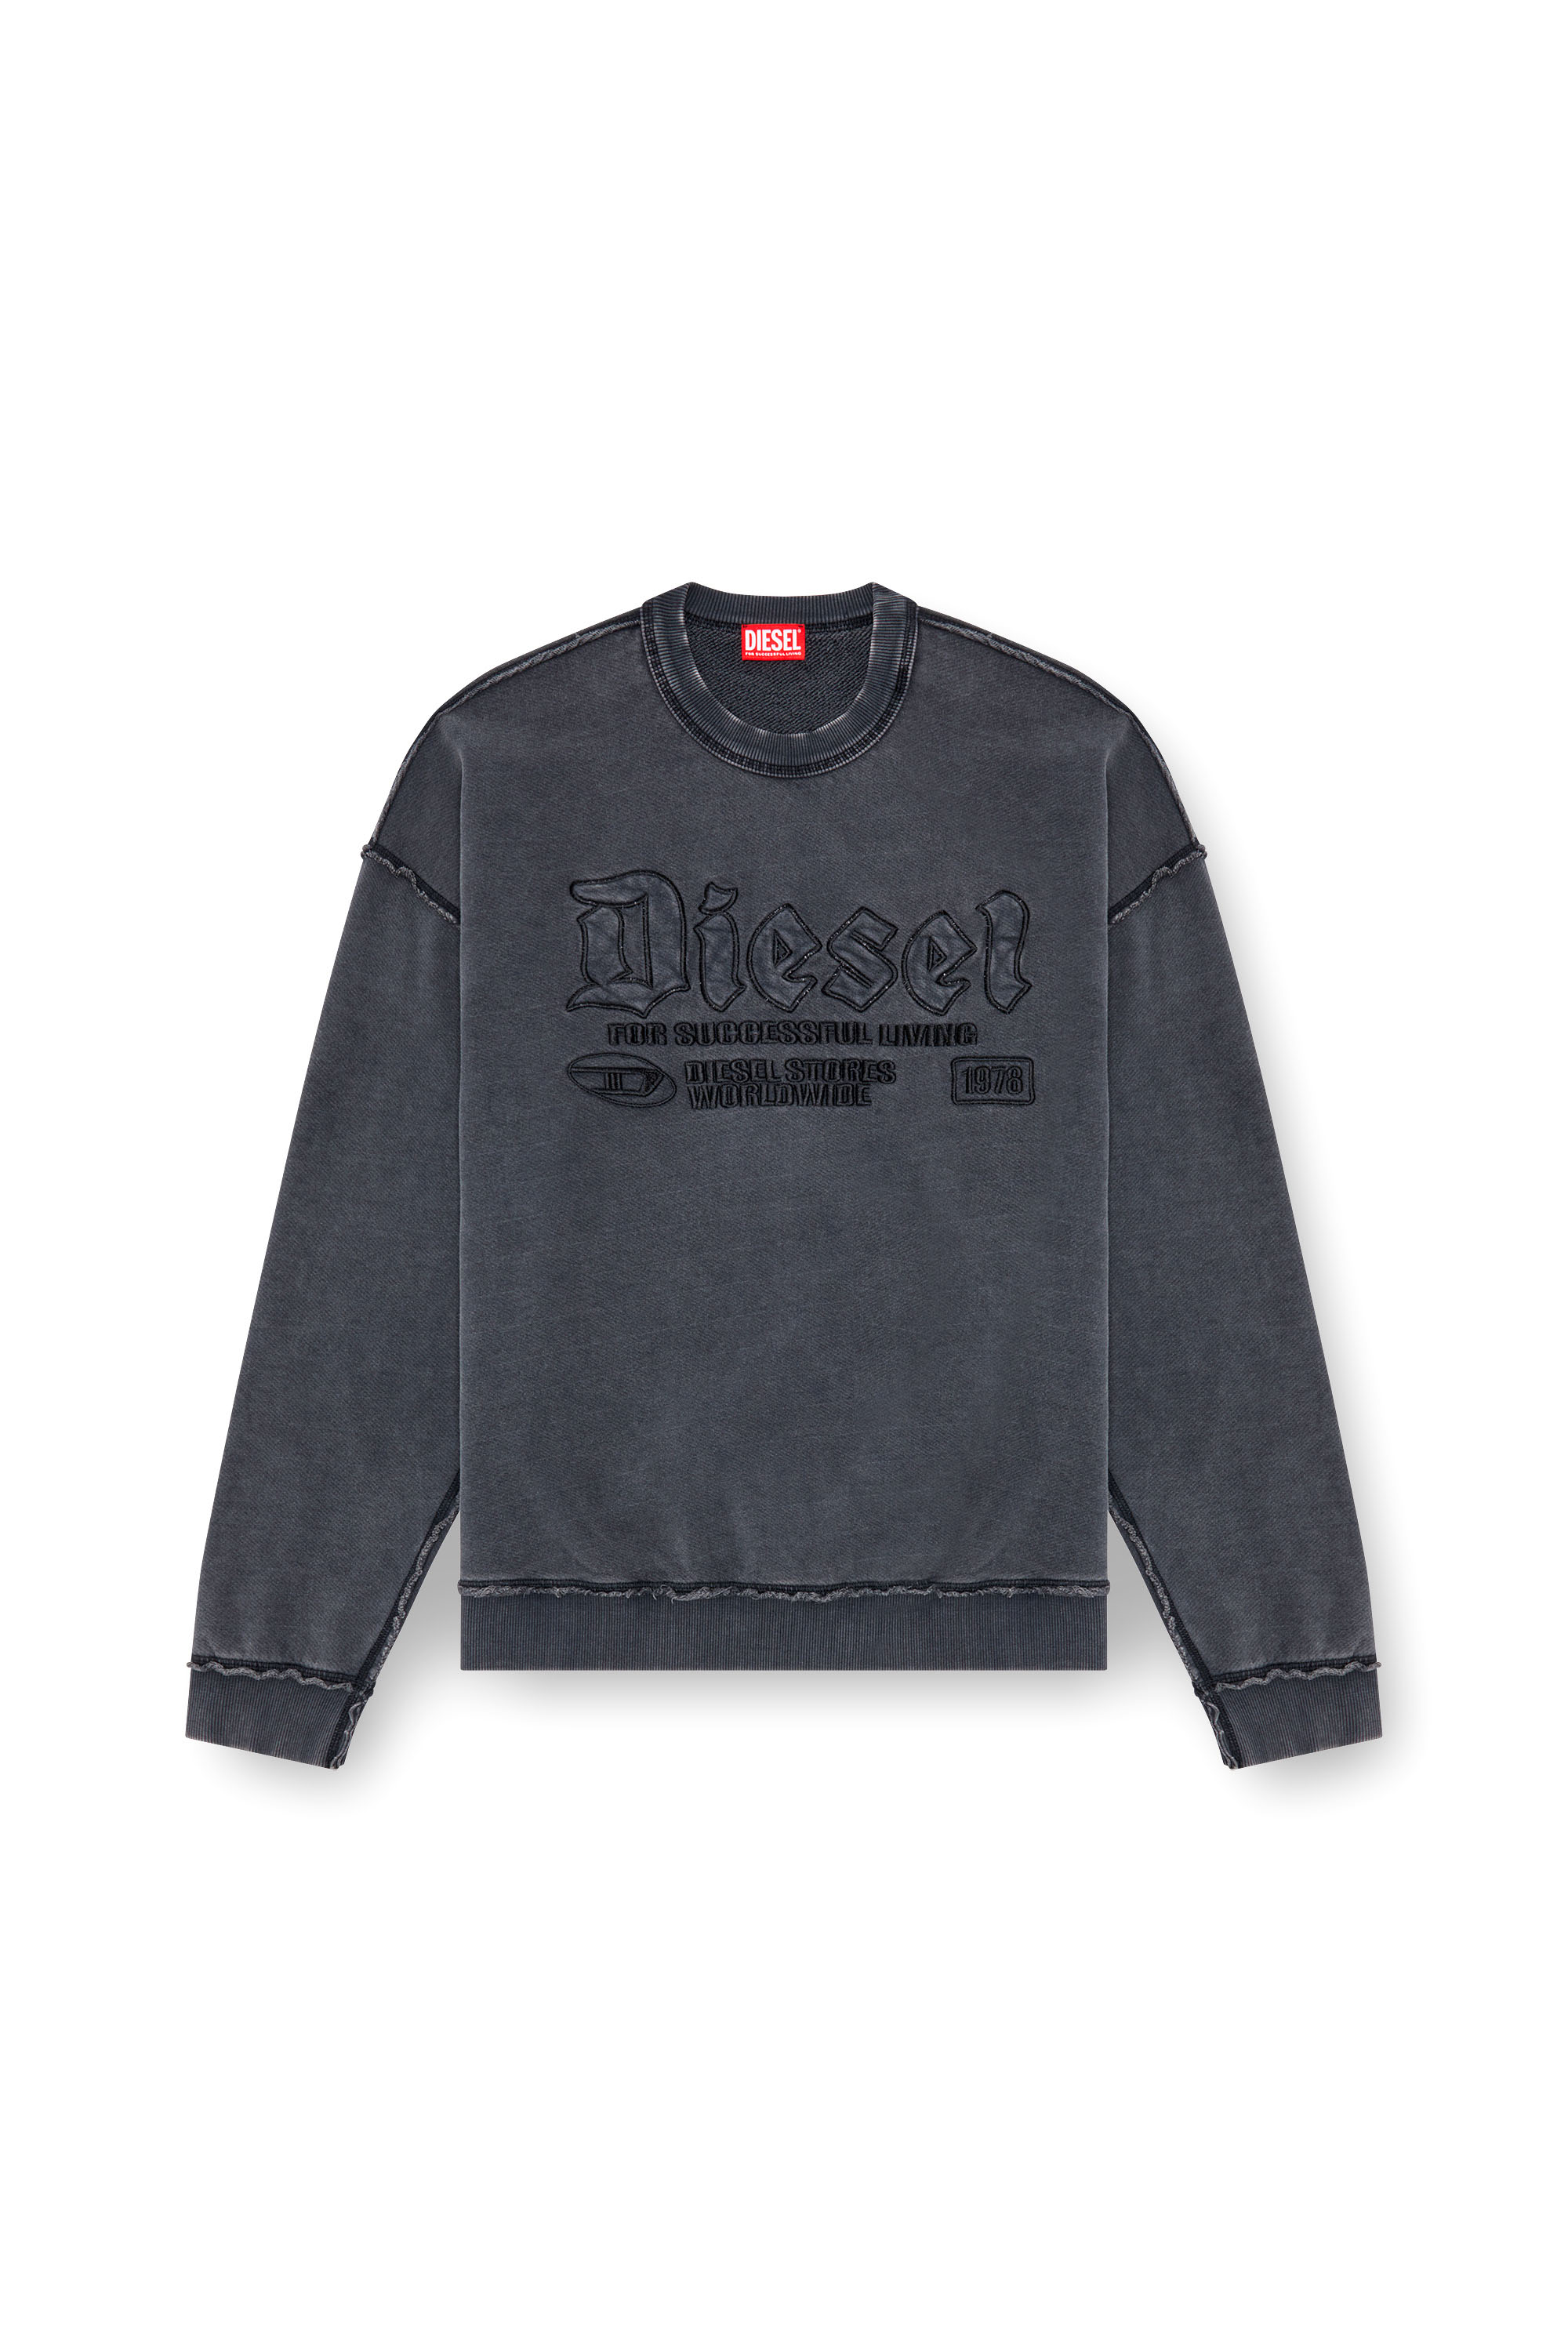 Diesel - S-BOXT-RAW, Homme Sweat-shirt avec logo brodé in Noir - Image 3